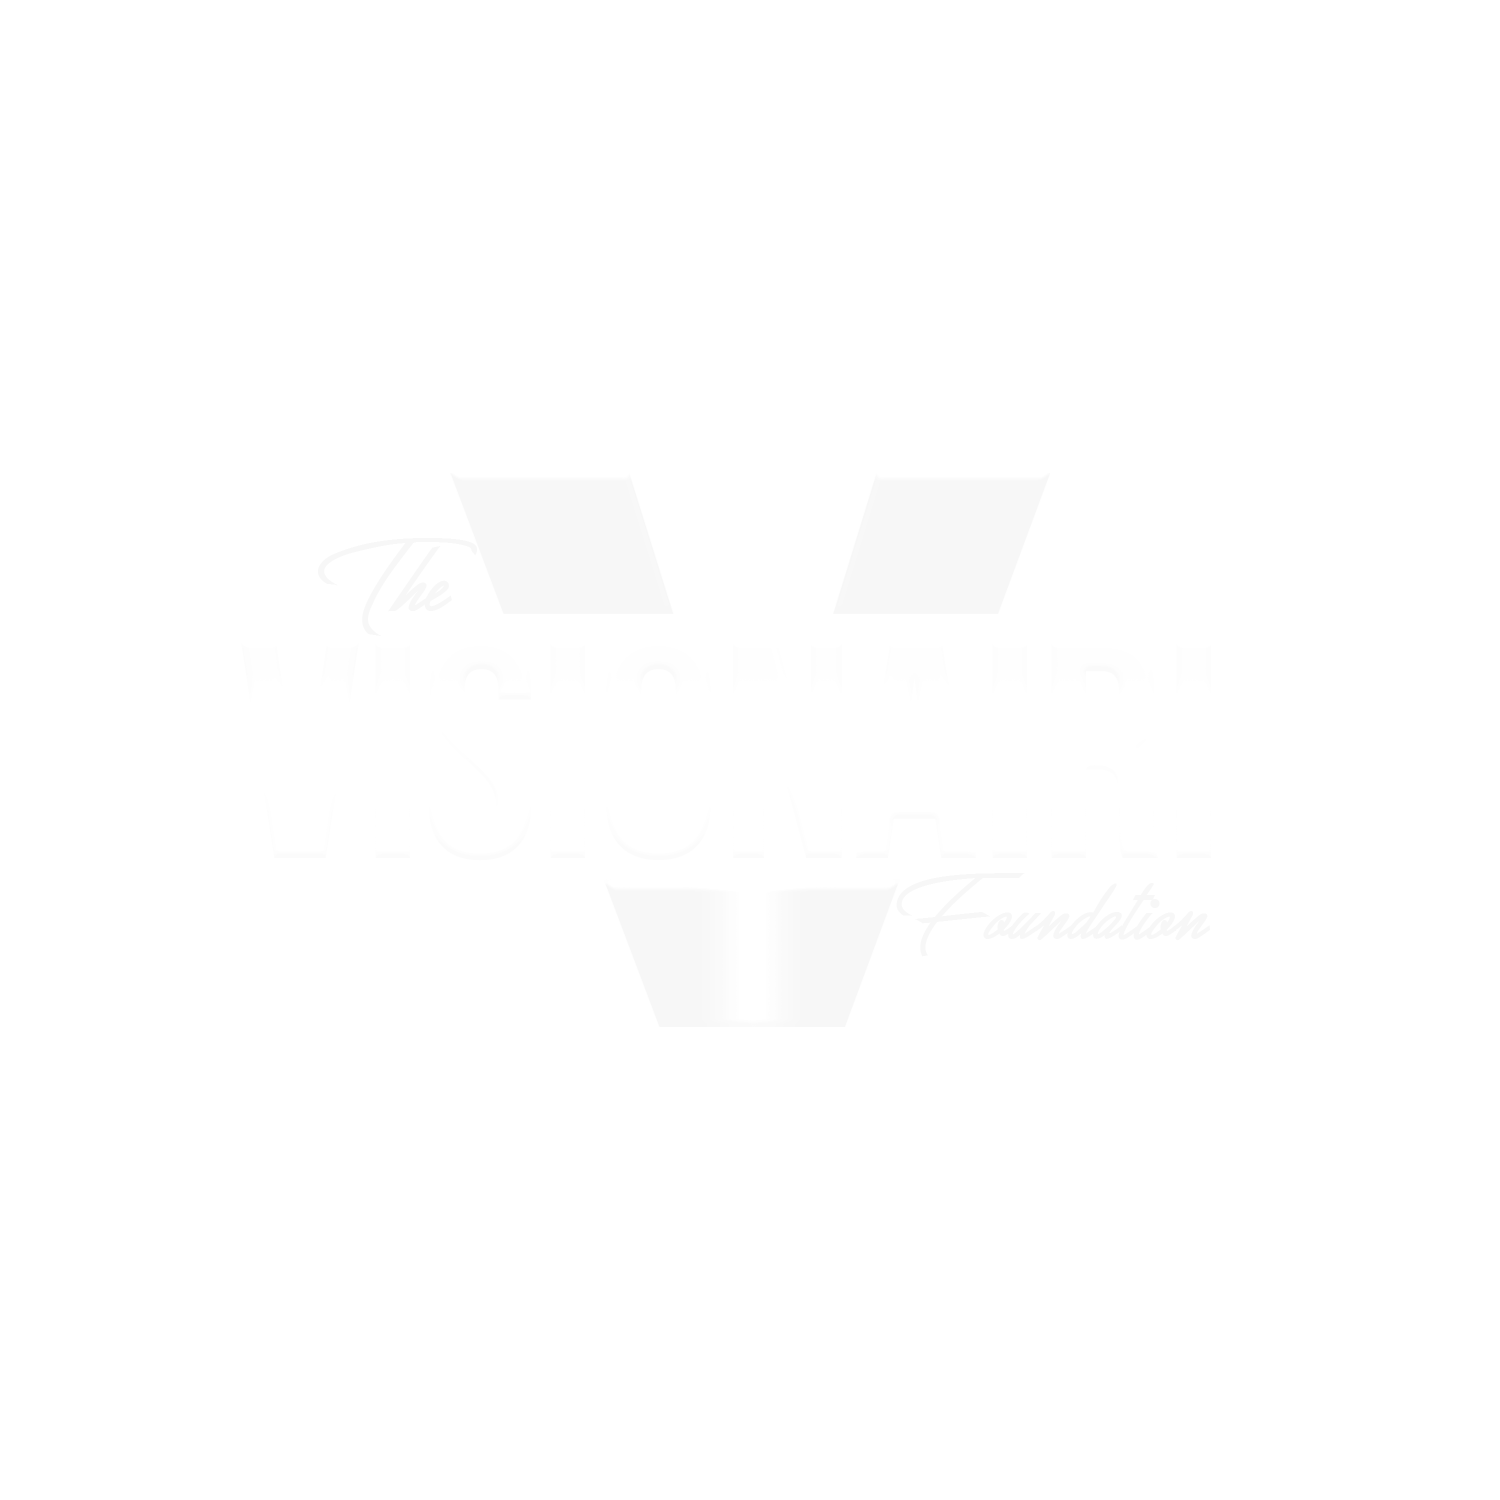 The Visionairi Foundation